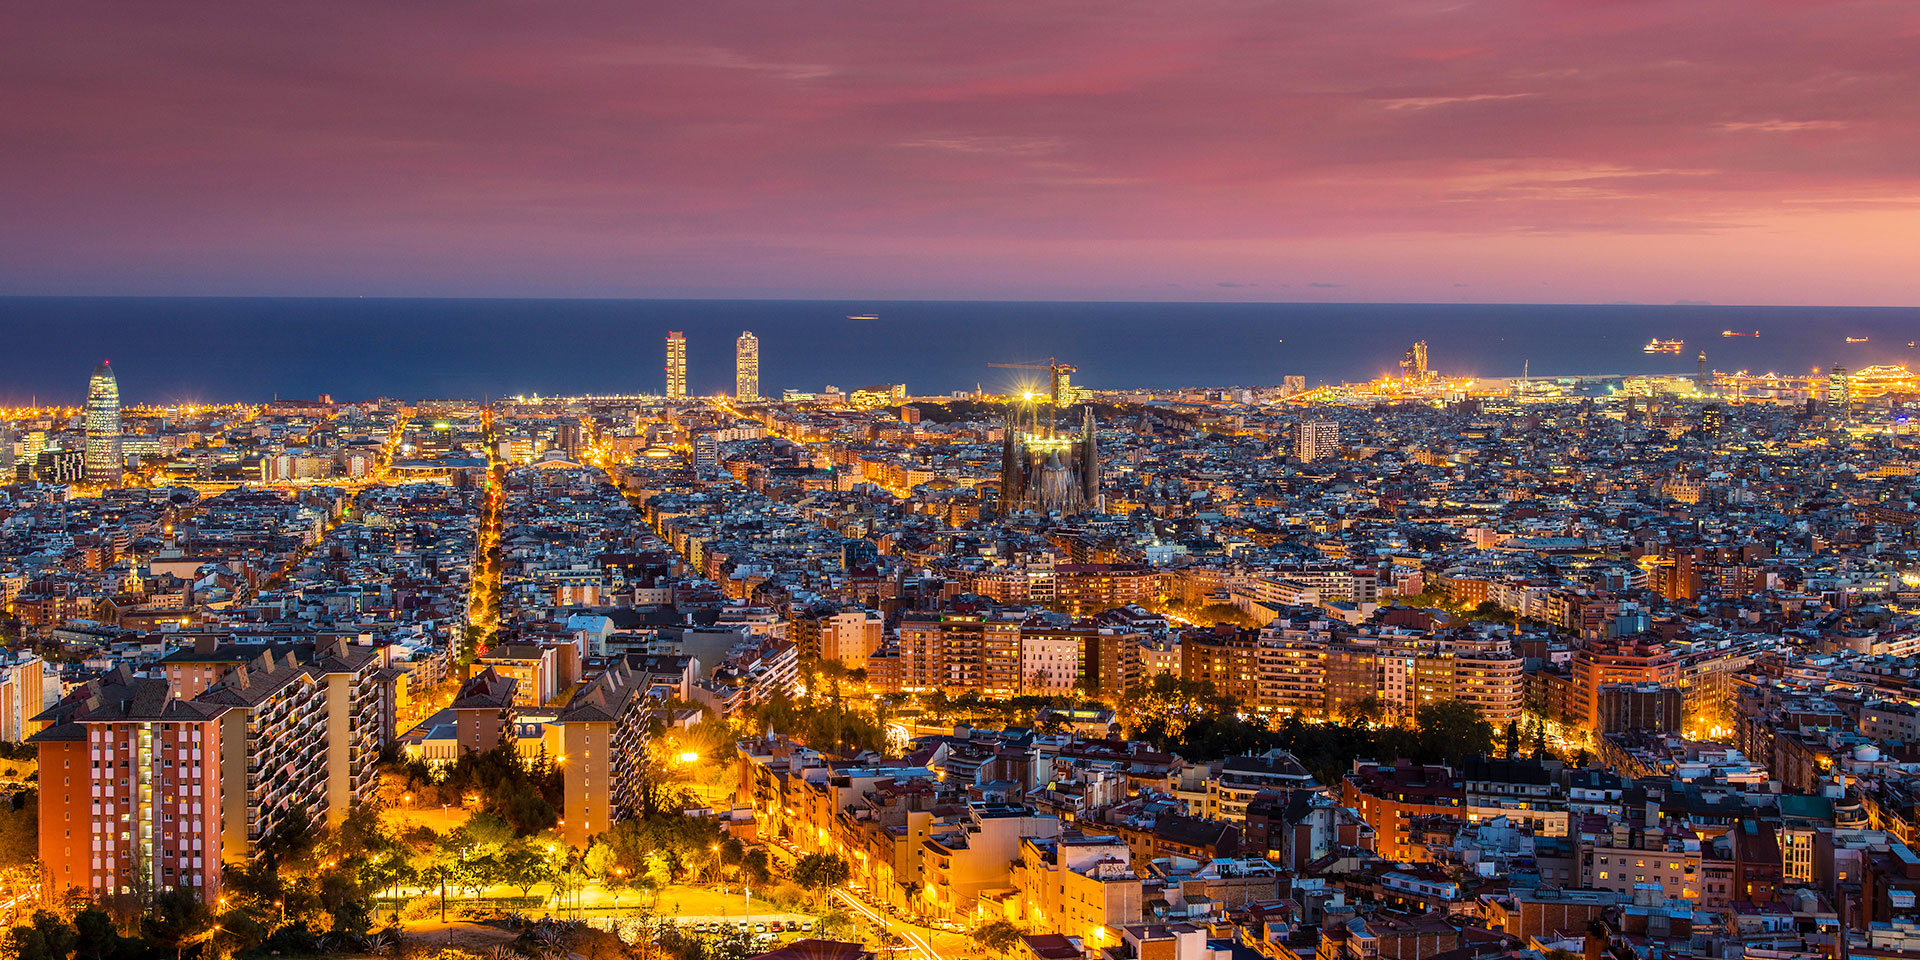 Barcelona sunset over the city.